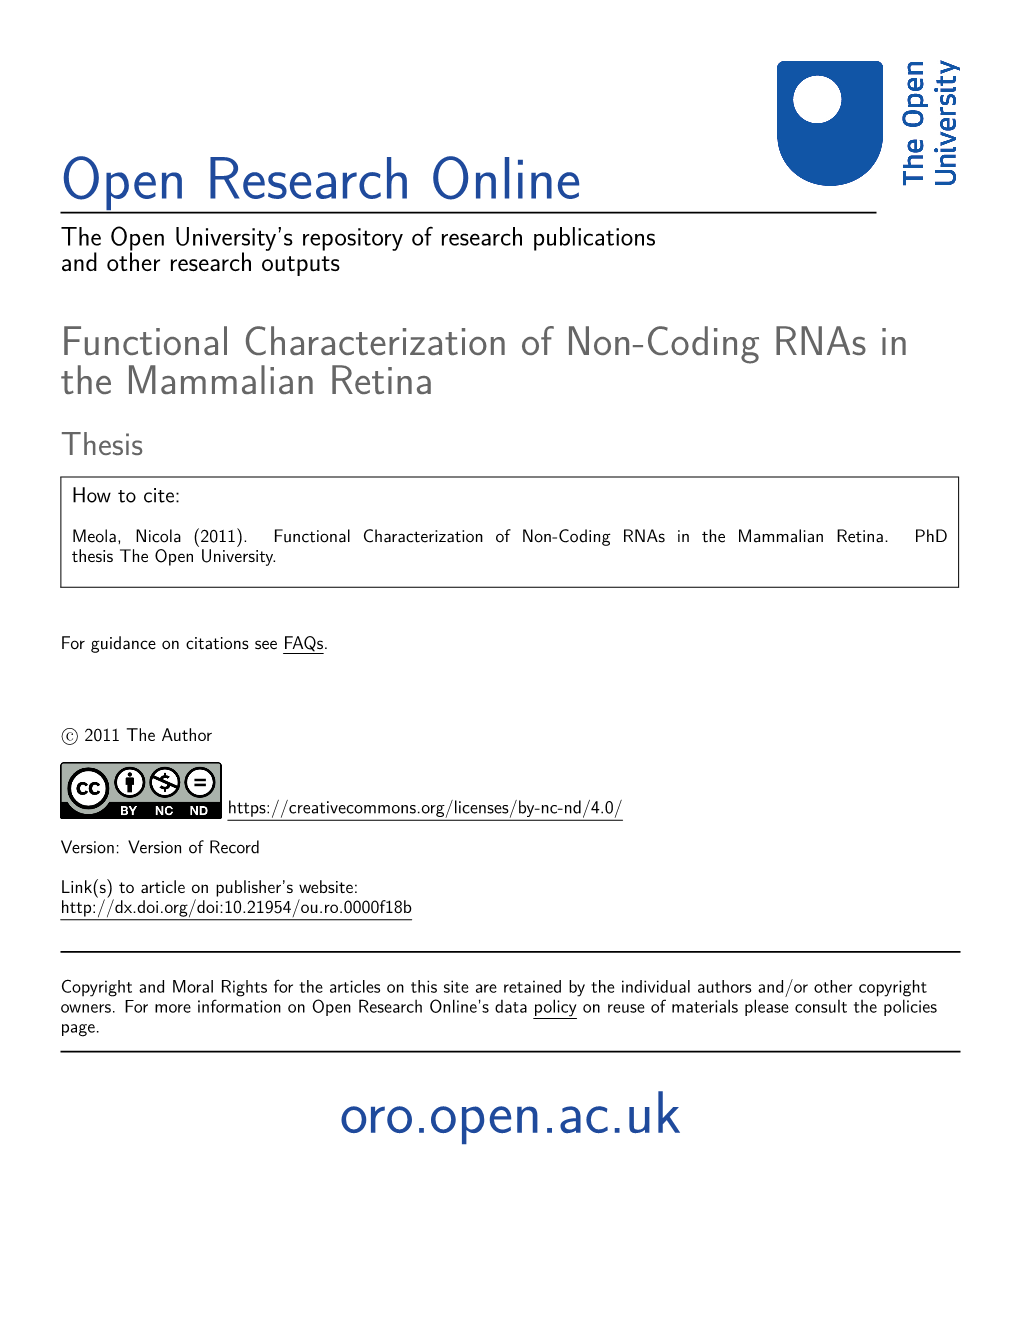 Doctor of Philosophy, Phd Nicola Meola Functional Characterization of Non-Coding Rnas in the Mammalian Retina O] F